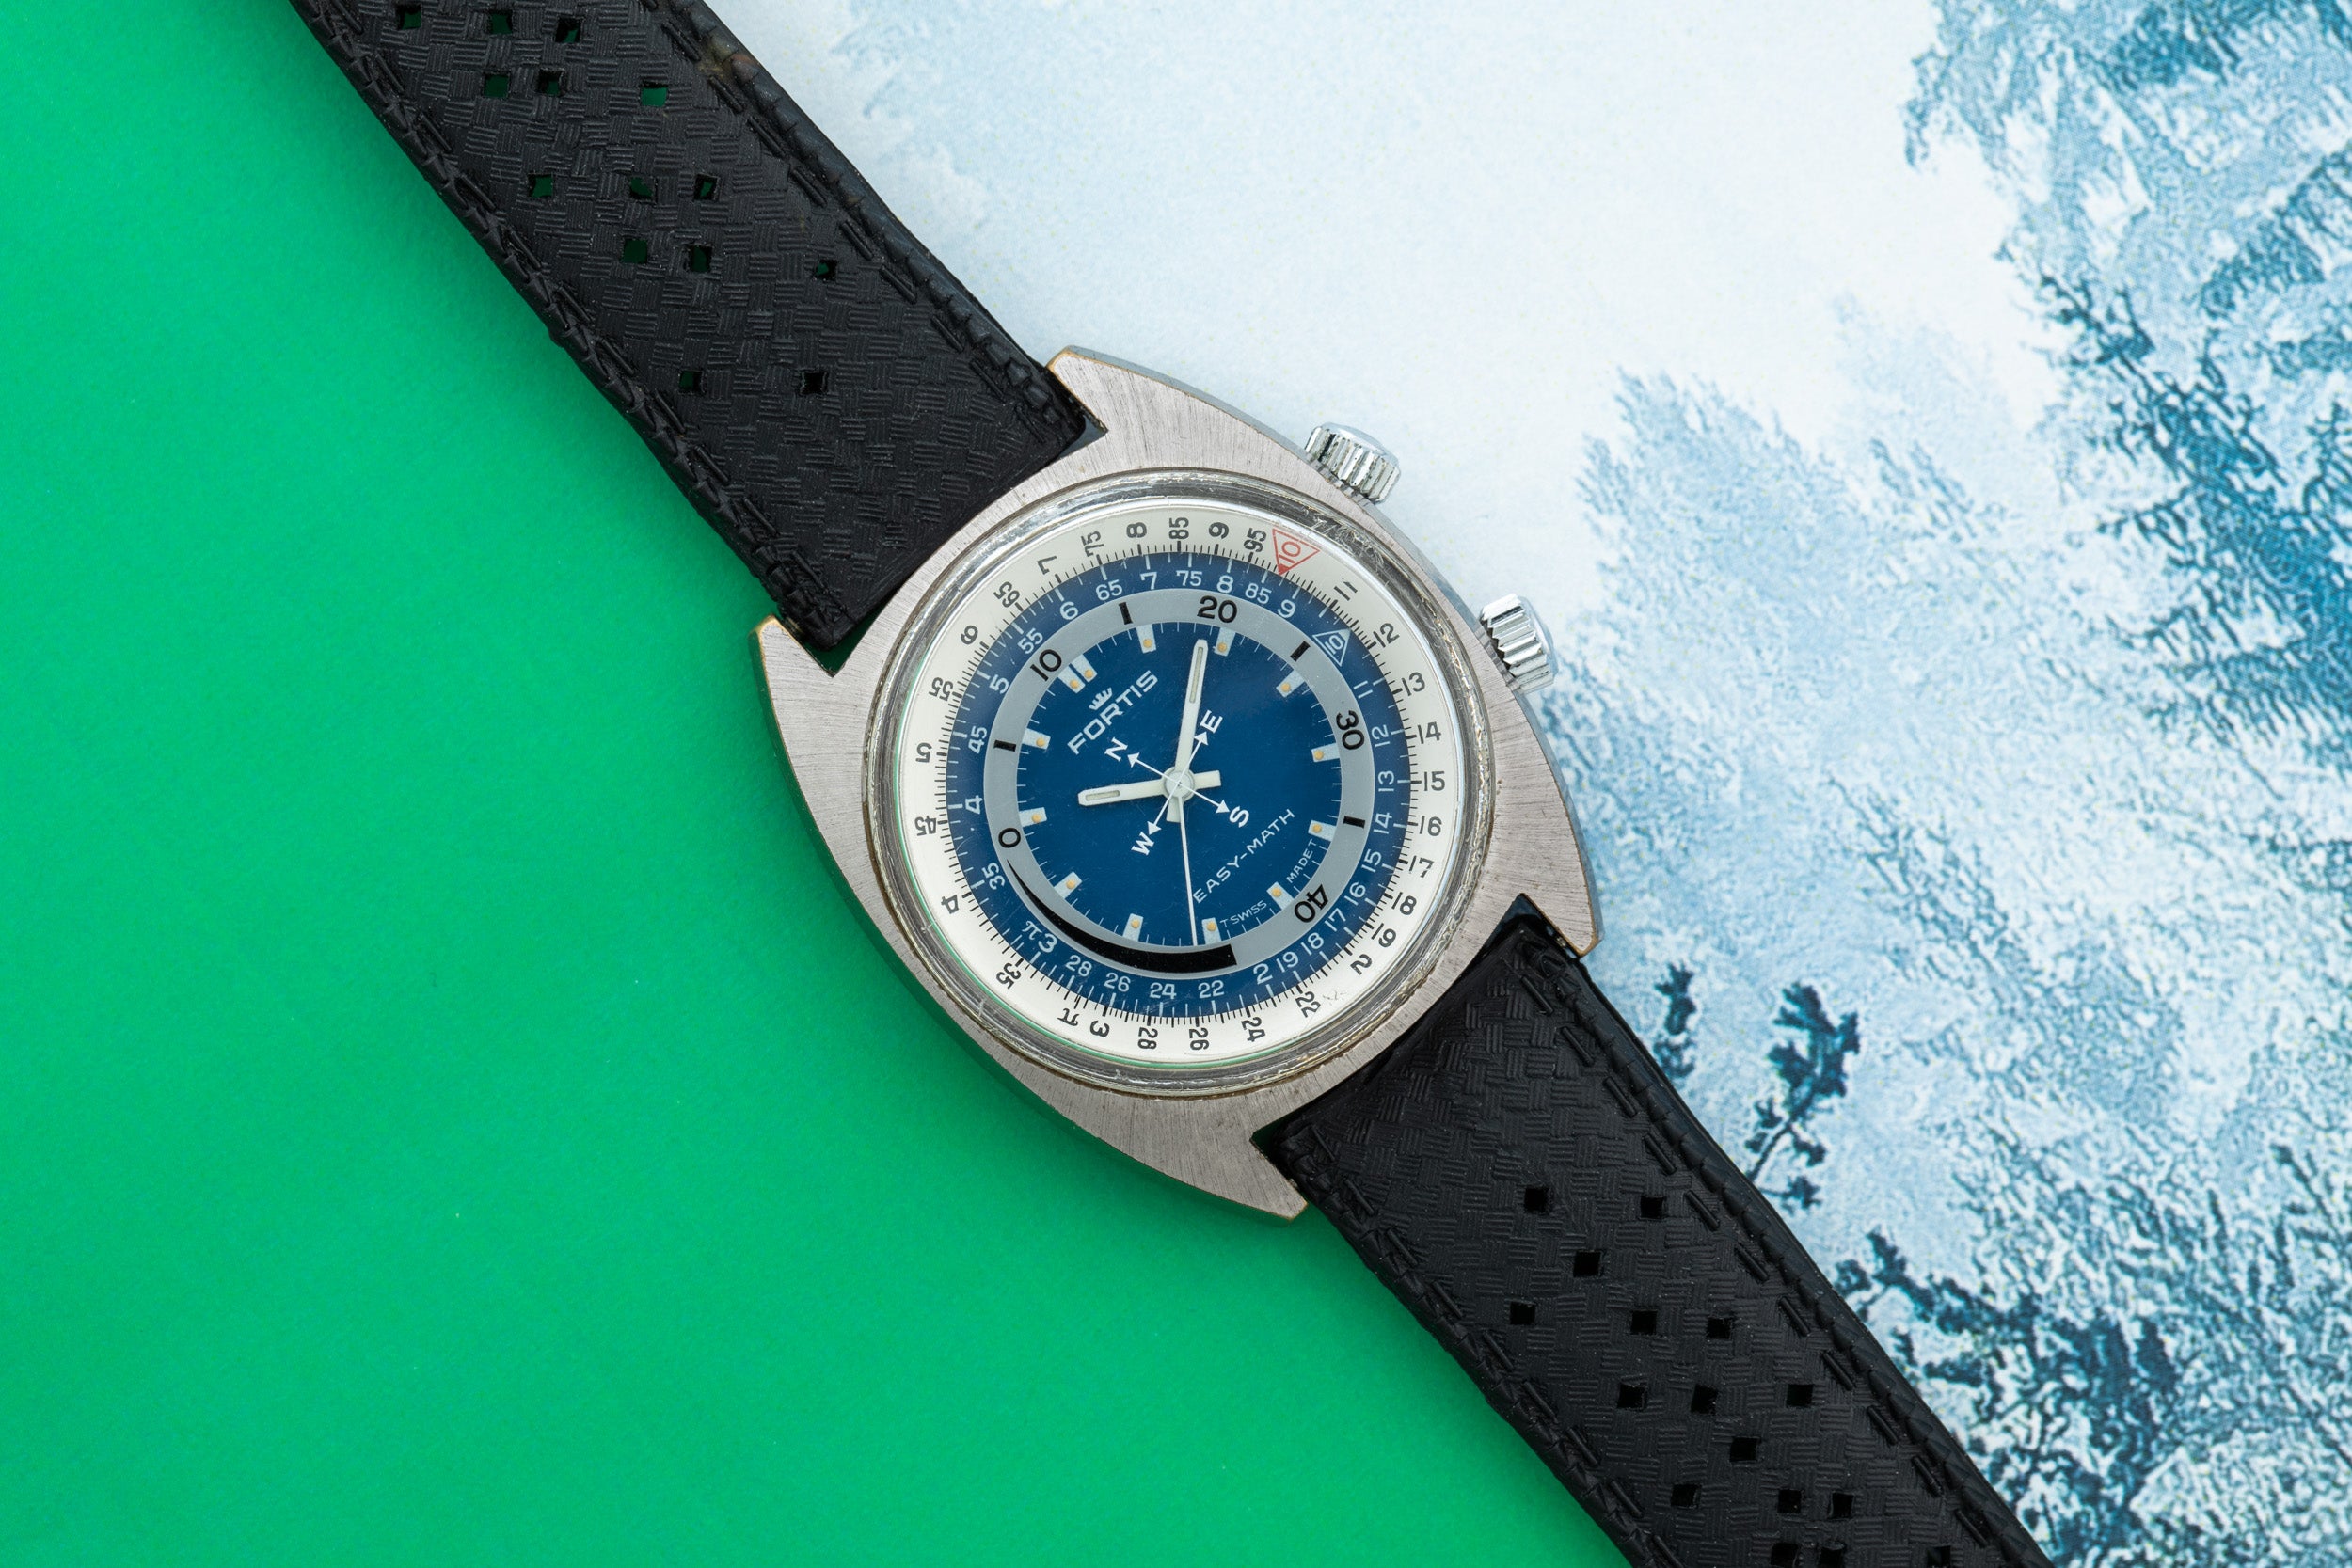 Men's Watches Simple Time Luxury Sports Quartz-Watch Leather Strap Nylon  Men Clock Wristwatch at Rs 802.99 | Hand Watch, हाथ की घड़ी, रिस्ट वाच - My  Online Collection Store, Bengaluru | ID: 2851552905091